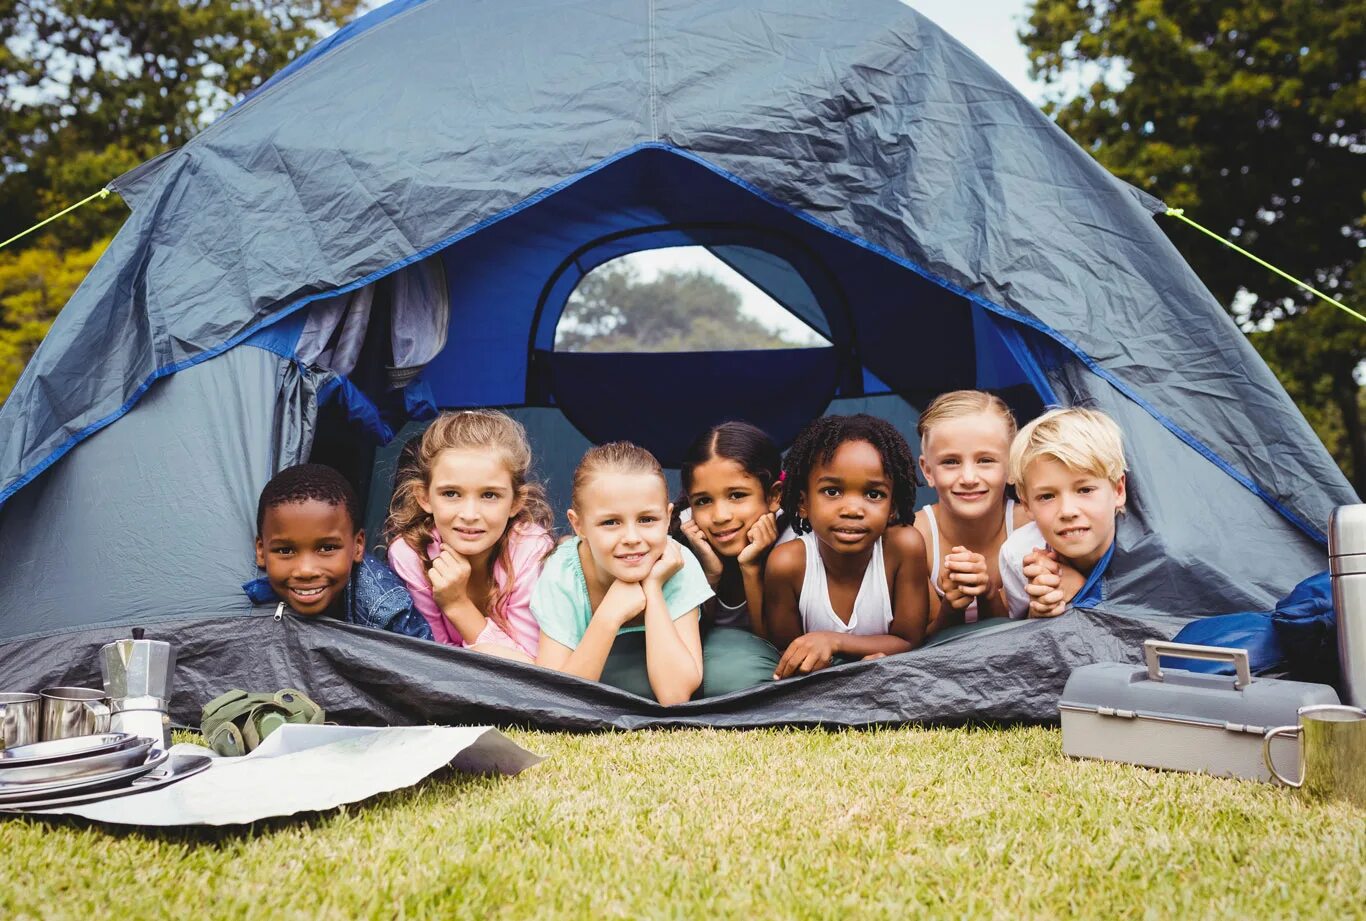 Кемпинг люди. Go Camping. Летс гоу Кэмп лагерь. Children's Camp Tent. When we go camping